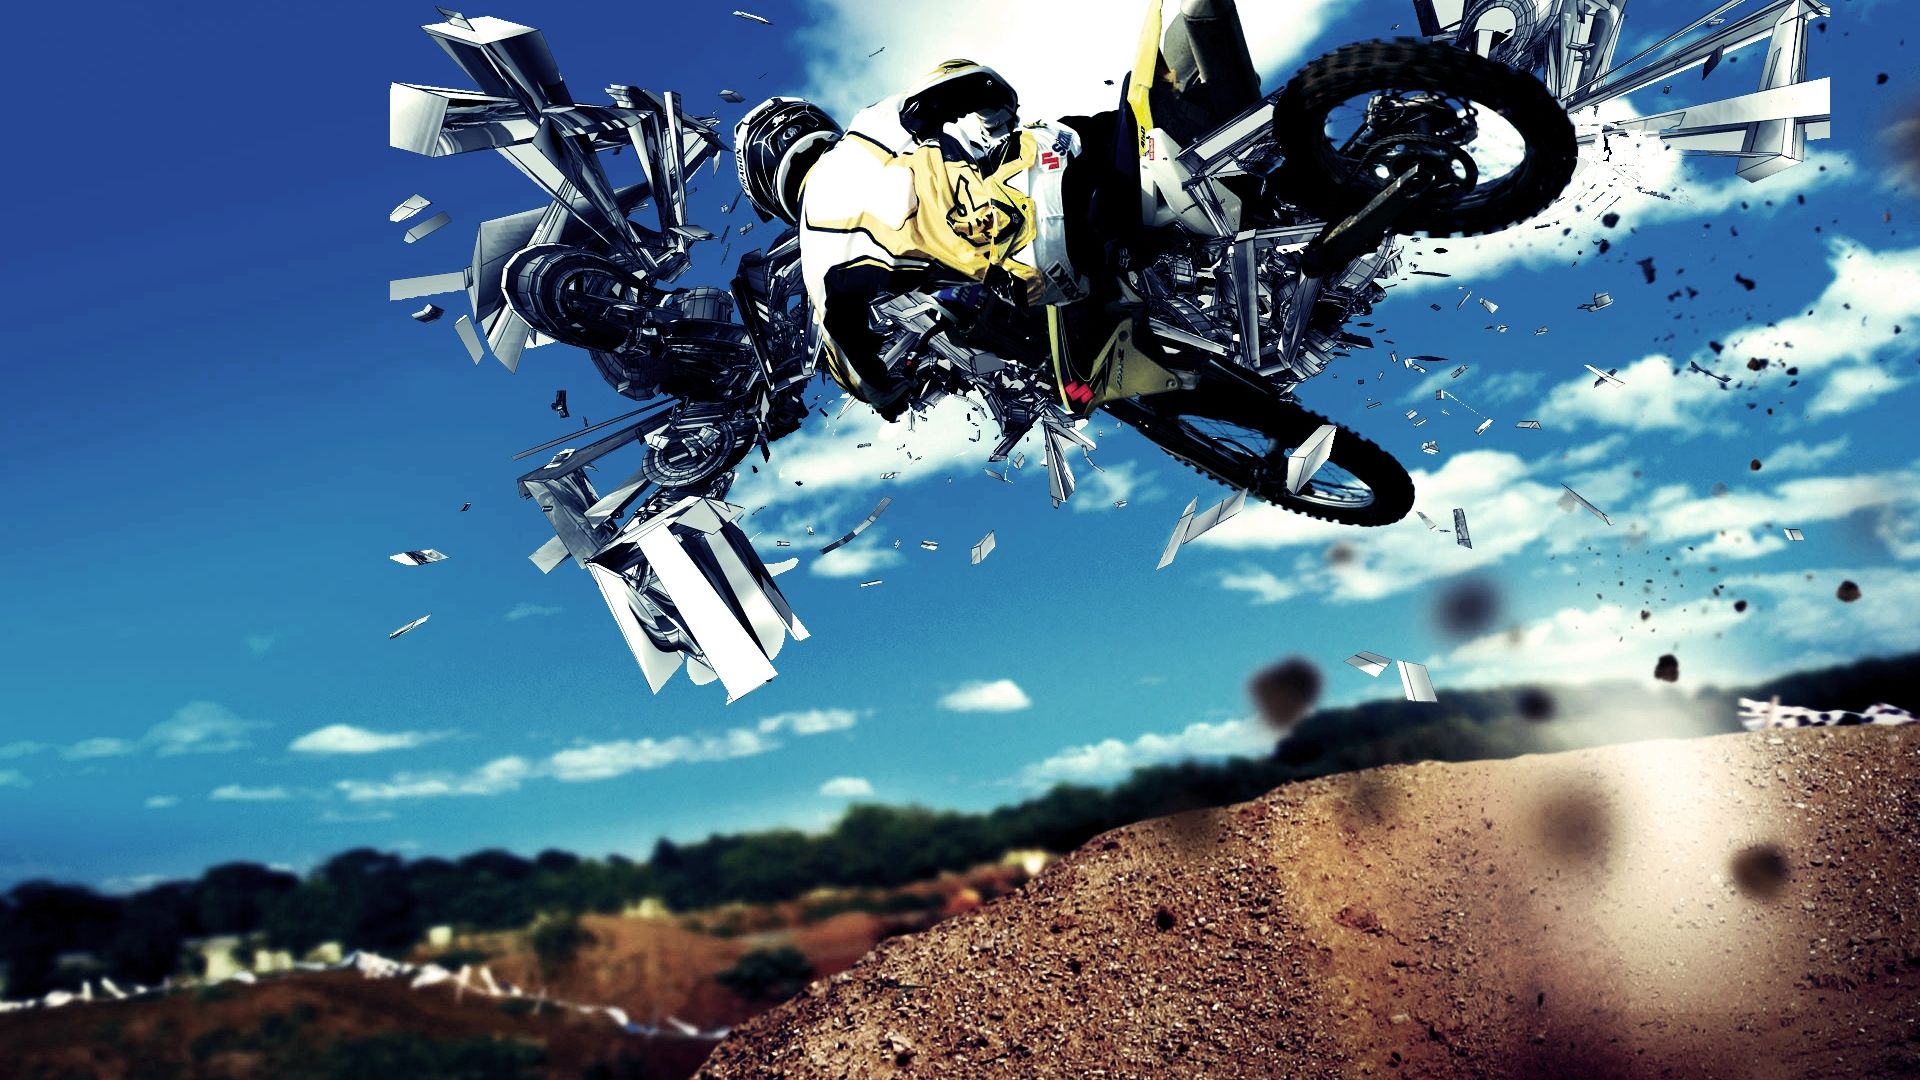 AMY75: Motocross Wallpaper 1920x1080 Download